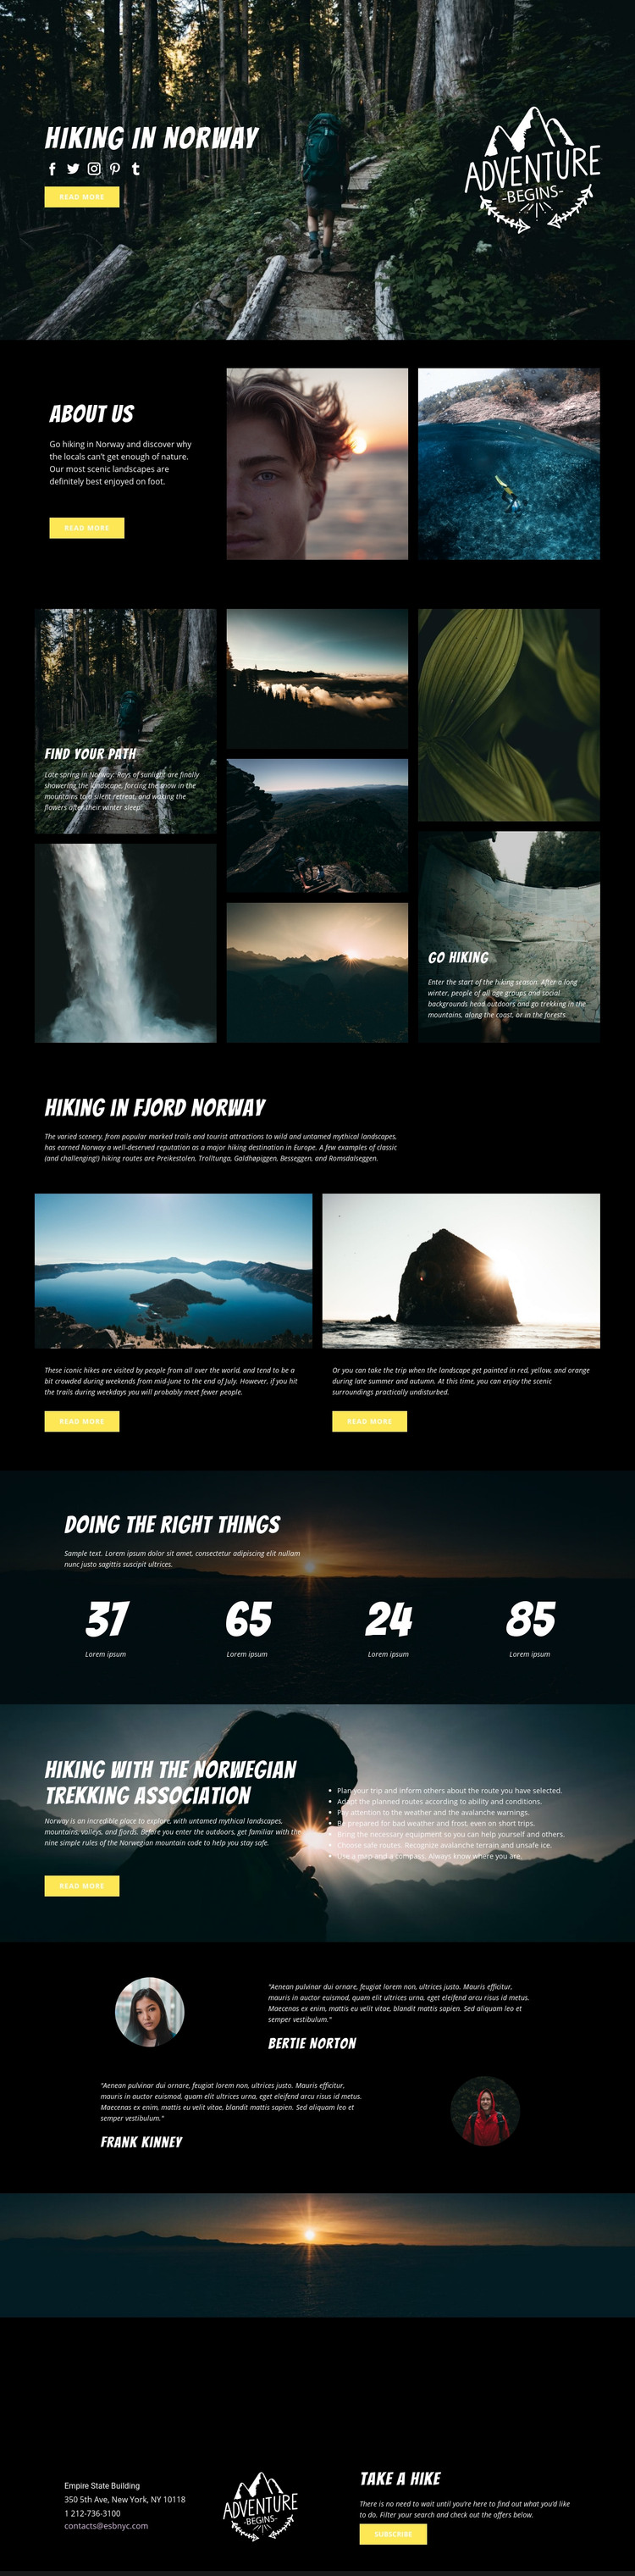 Norway Homepage Design